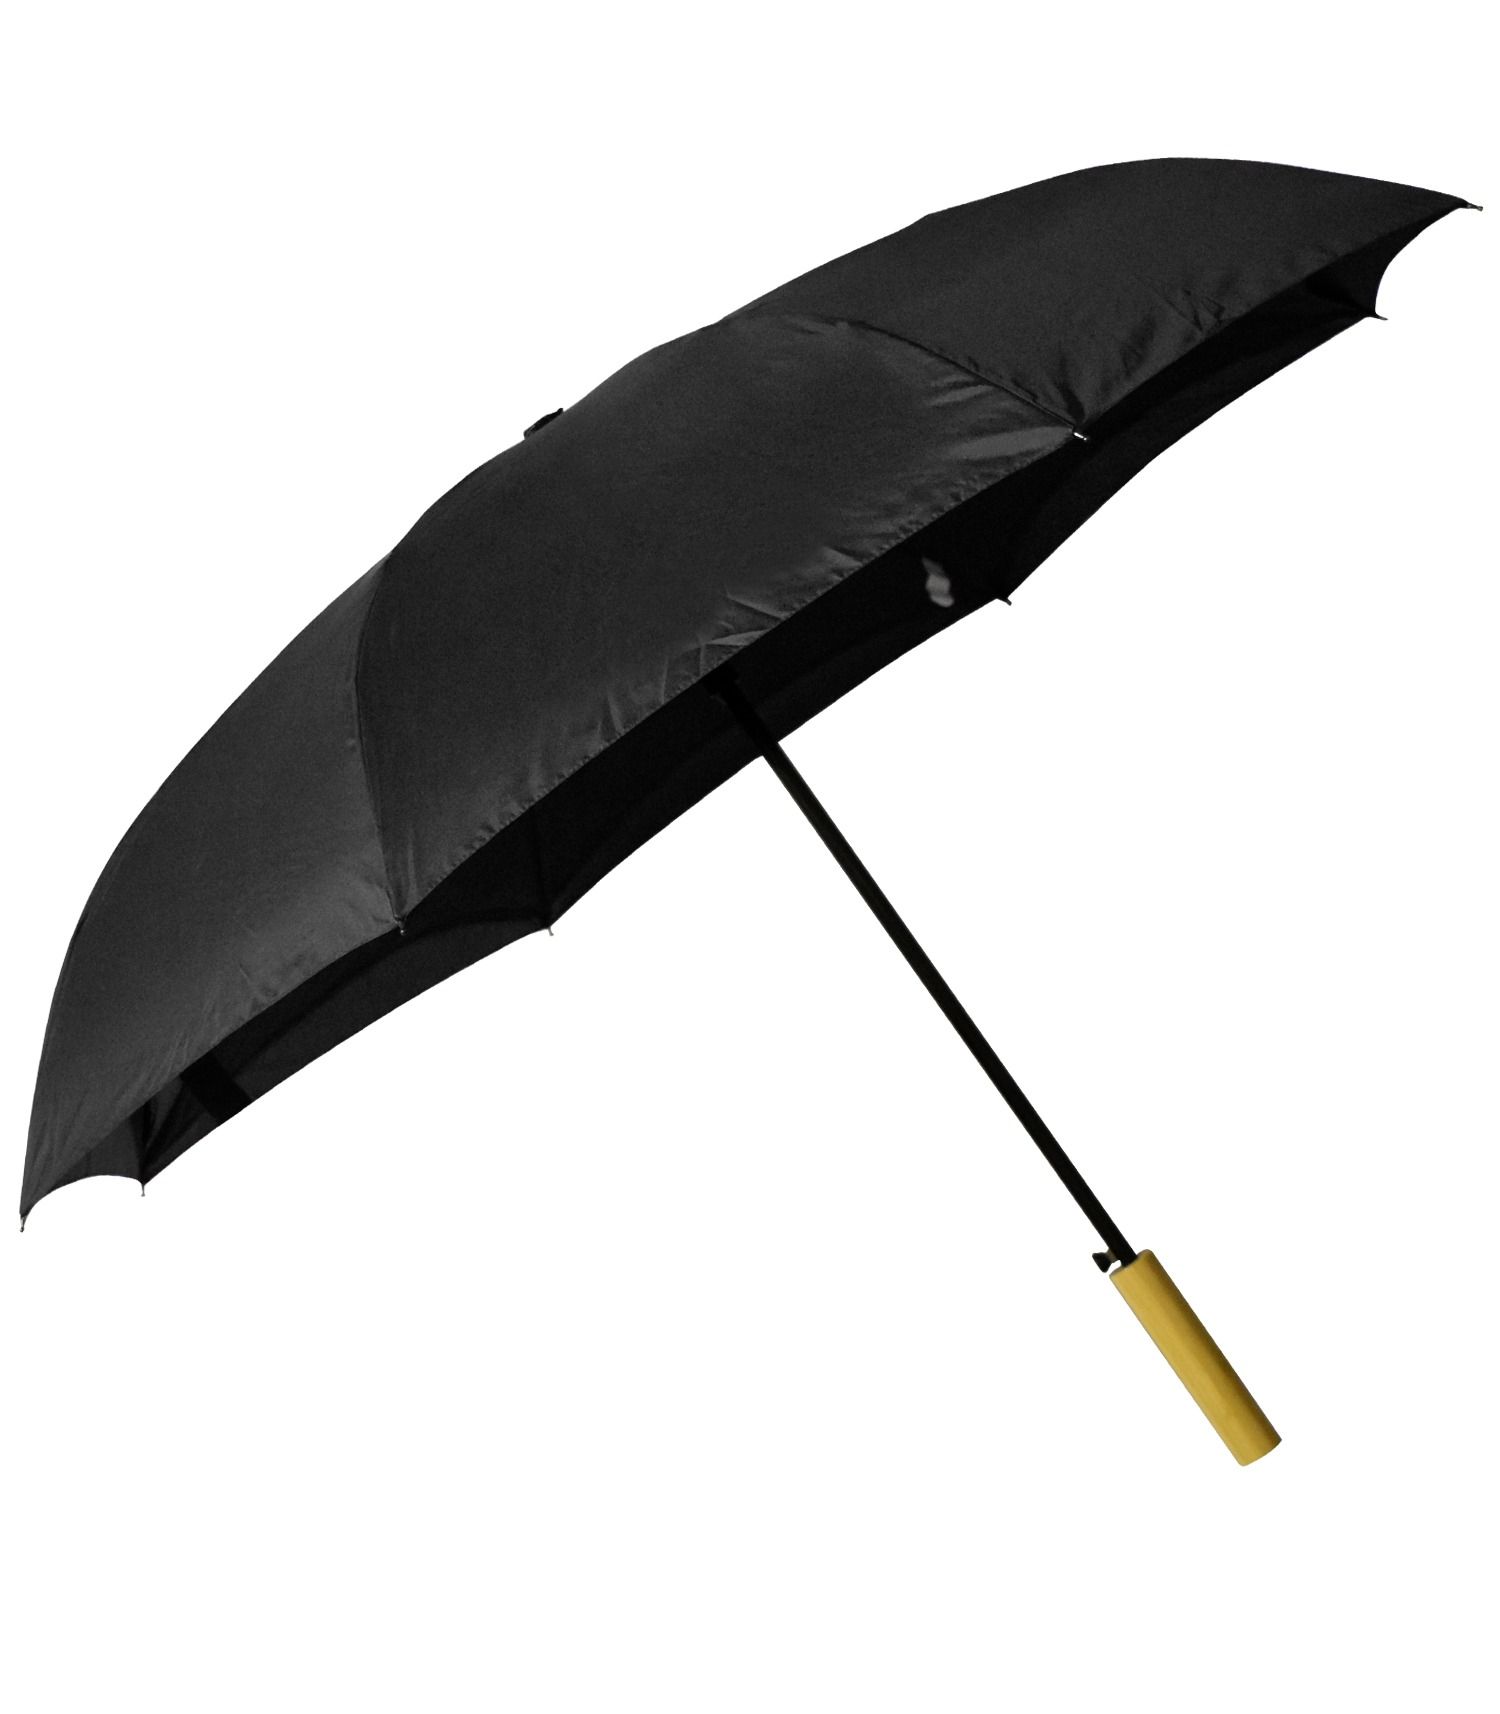 black umbrella with wooden handle